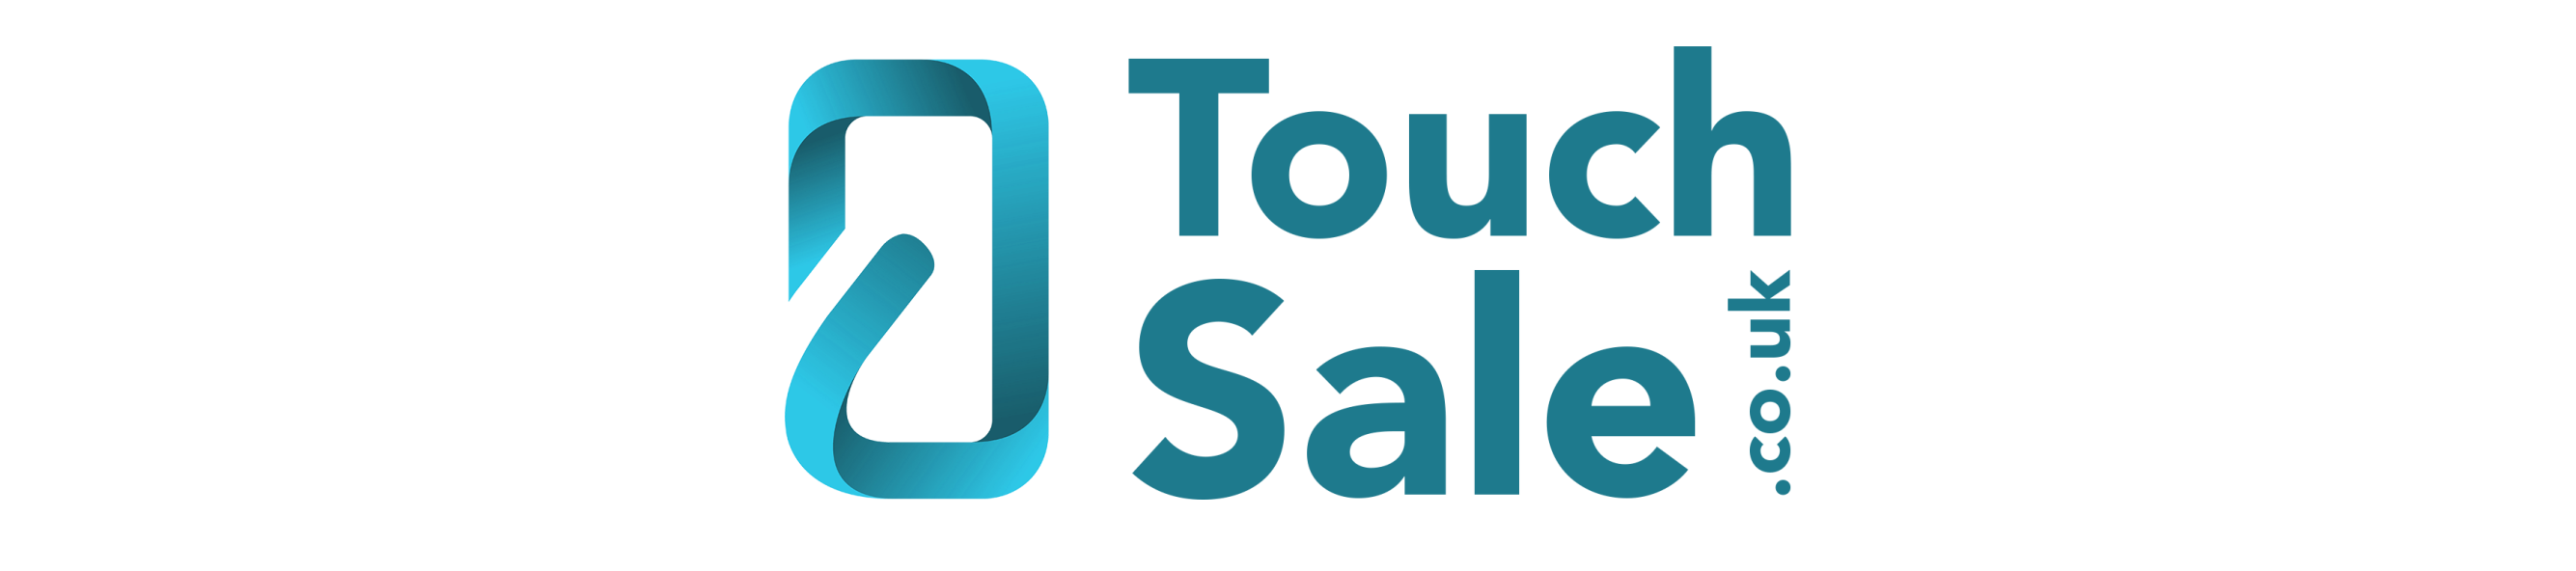 touchsale.co.uk